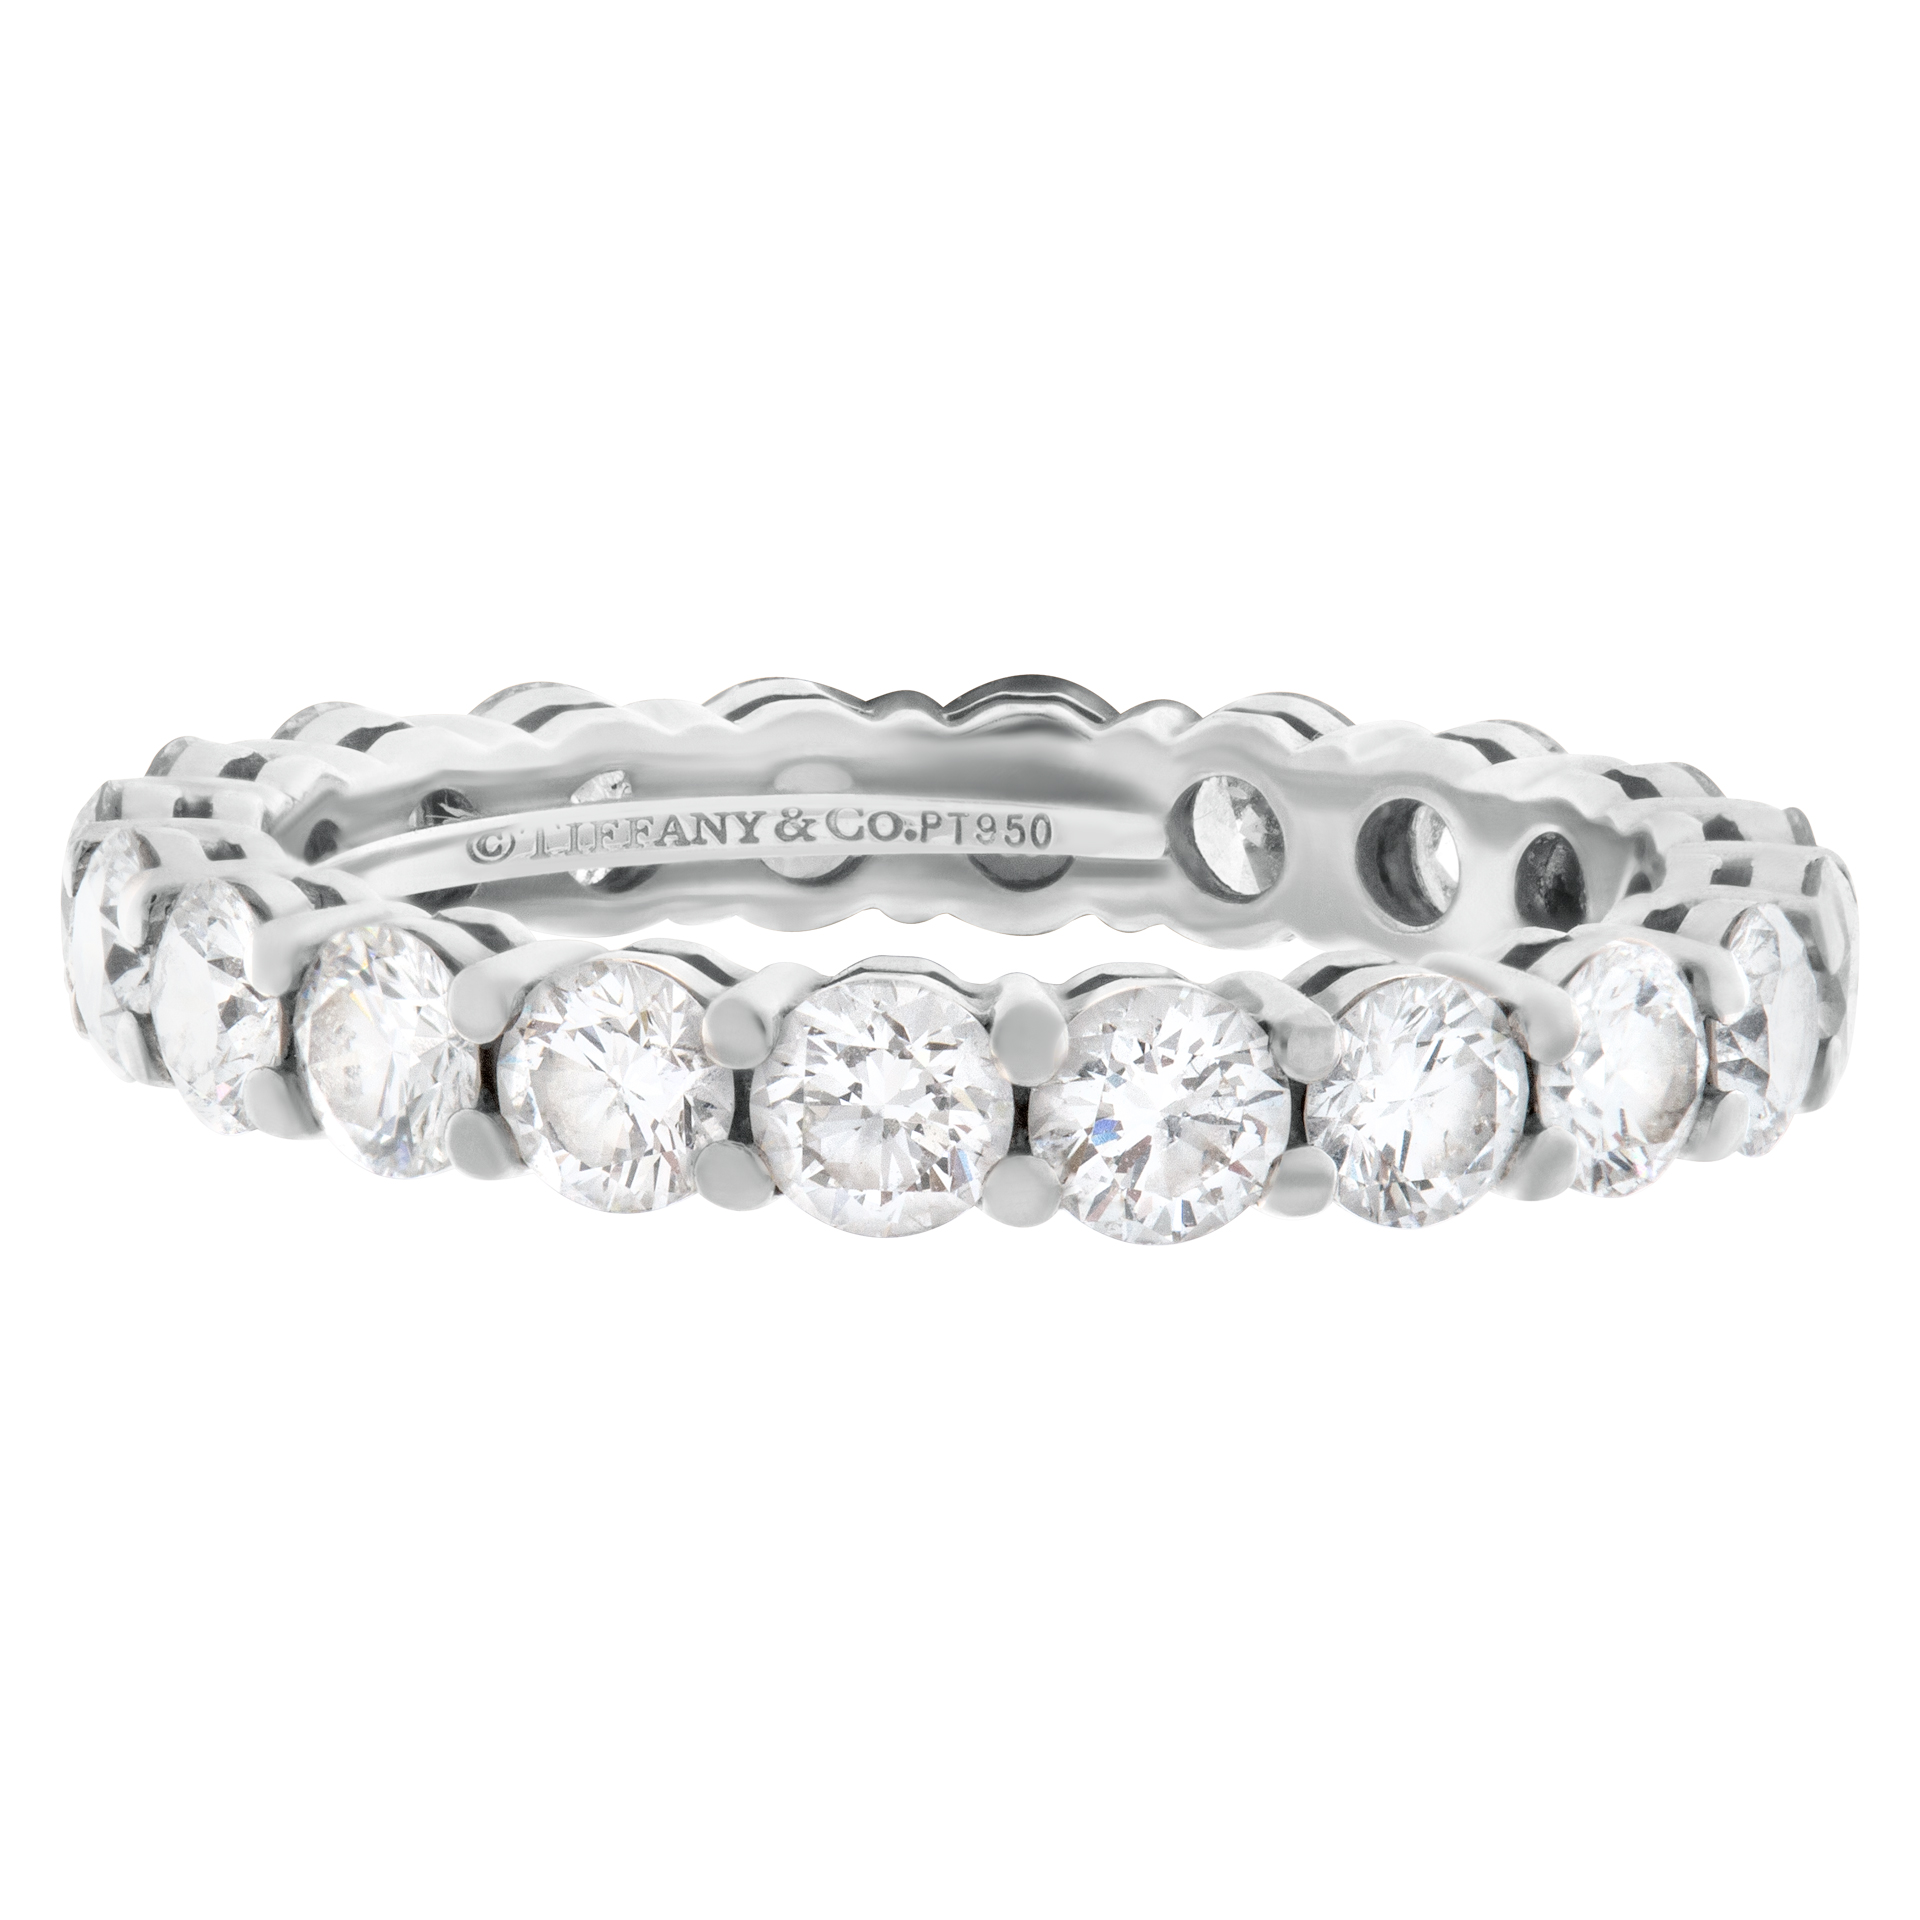 Tiffany & Co. Diamond Eternity Band and Ring platinum ring with 1.80 carat full cut round brilliant diamonds image 1